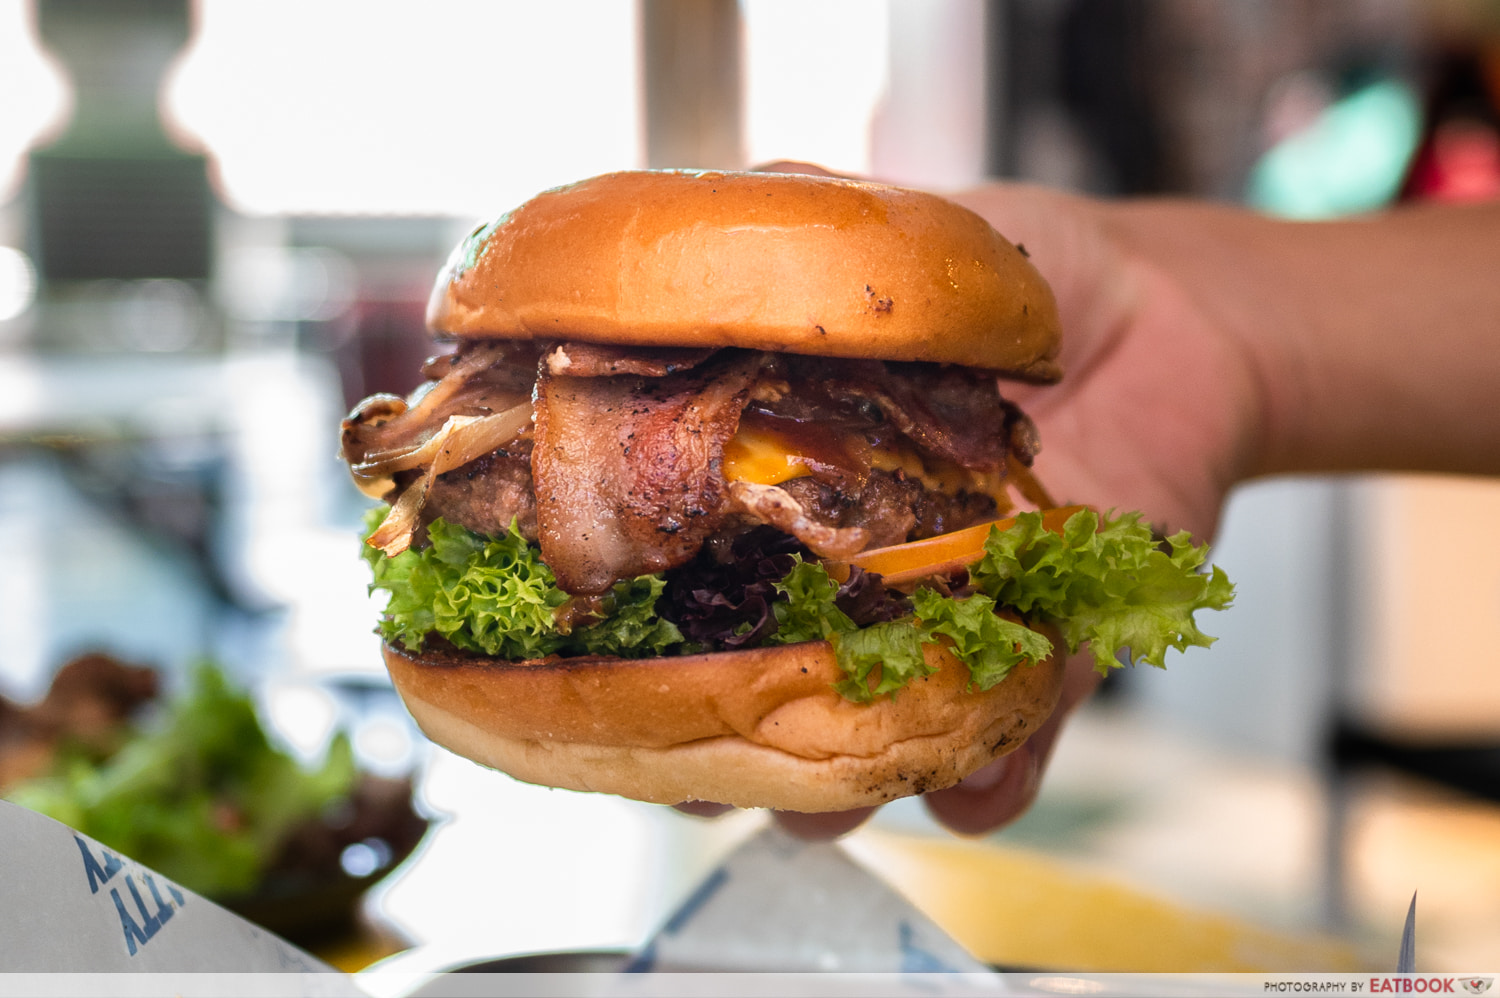 Fatty Patty Burger And Grill - bourbon bacon bbq burger